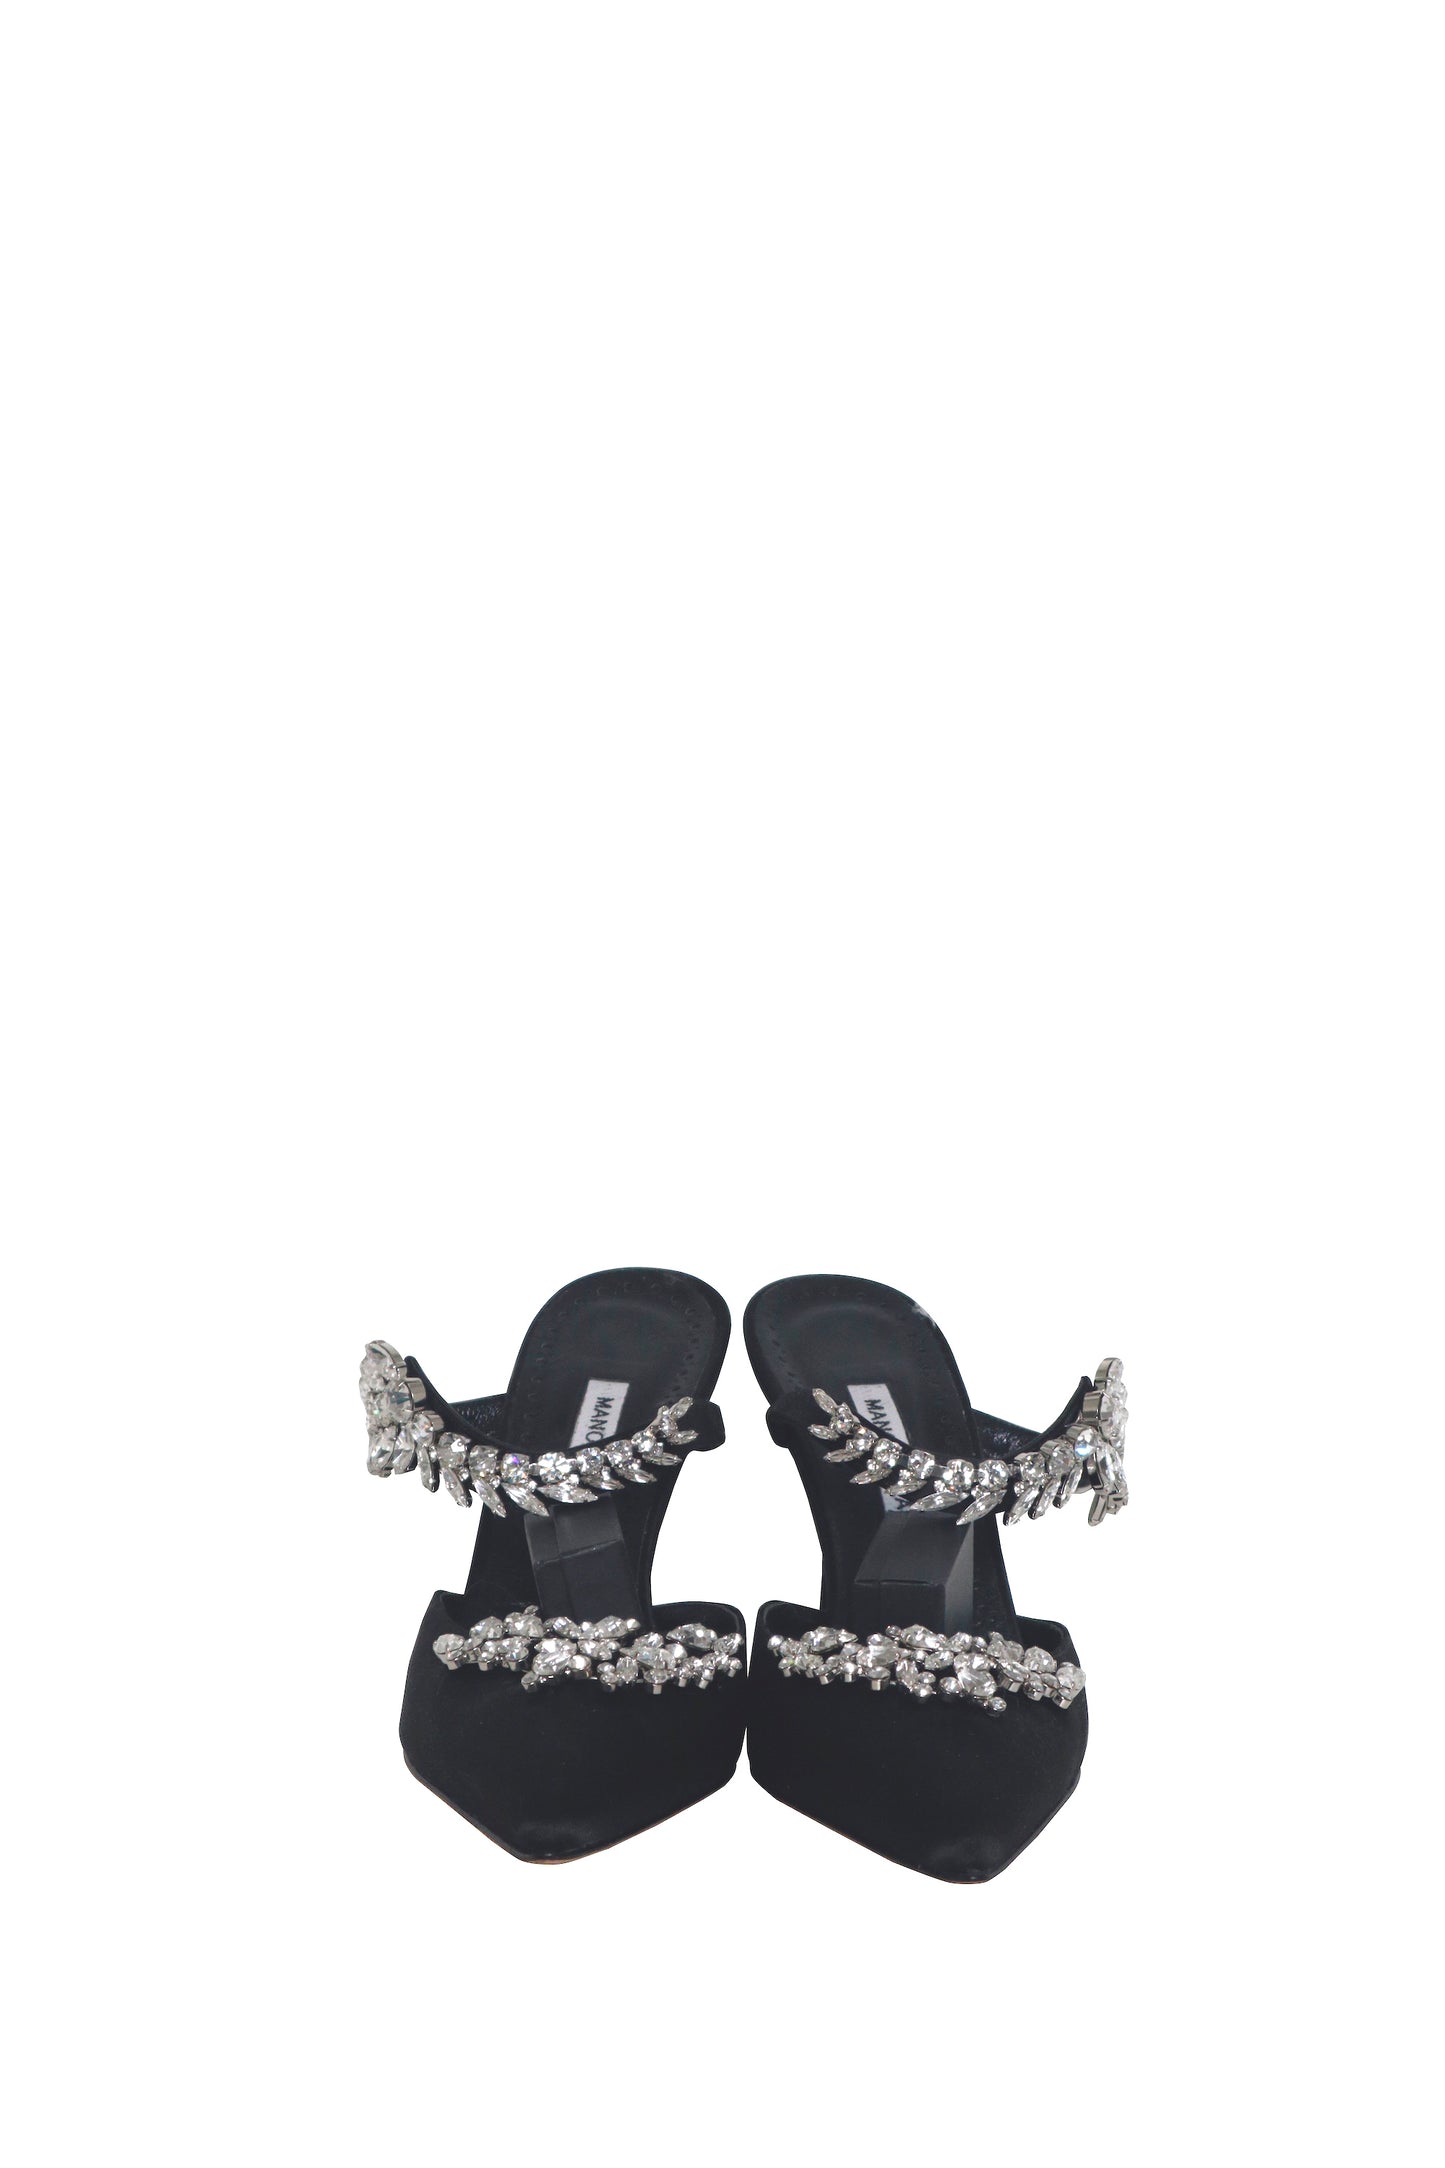 MANOLO BLAHNIK - Black Crystal Embellished Heels - Size 38.5